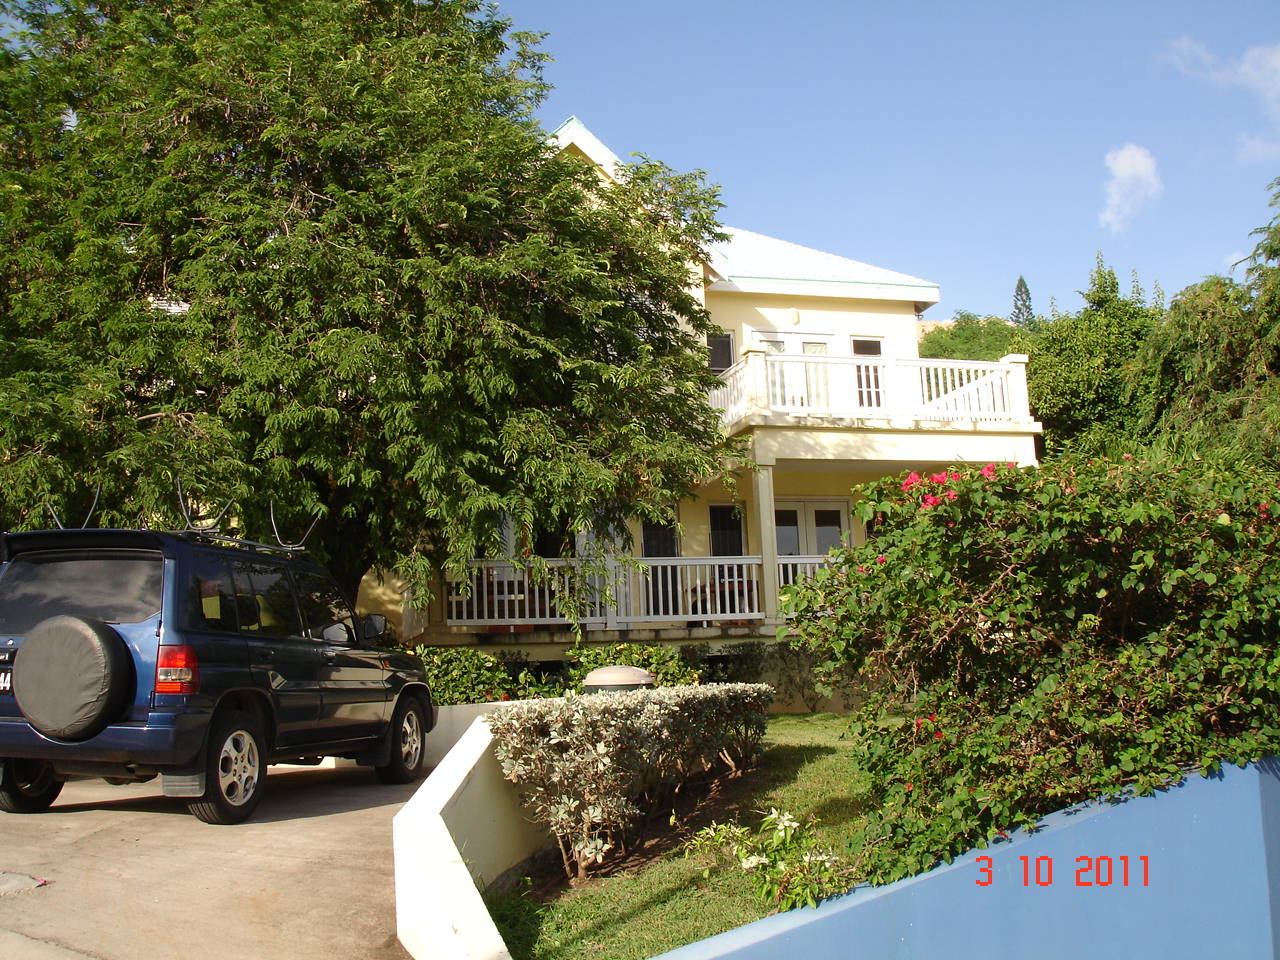 2 Bedroom Villa For Rent In Calypso Bay